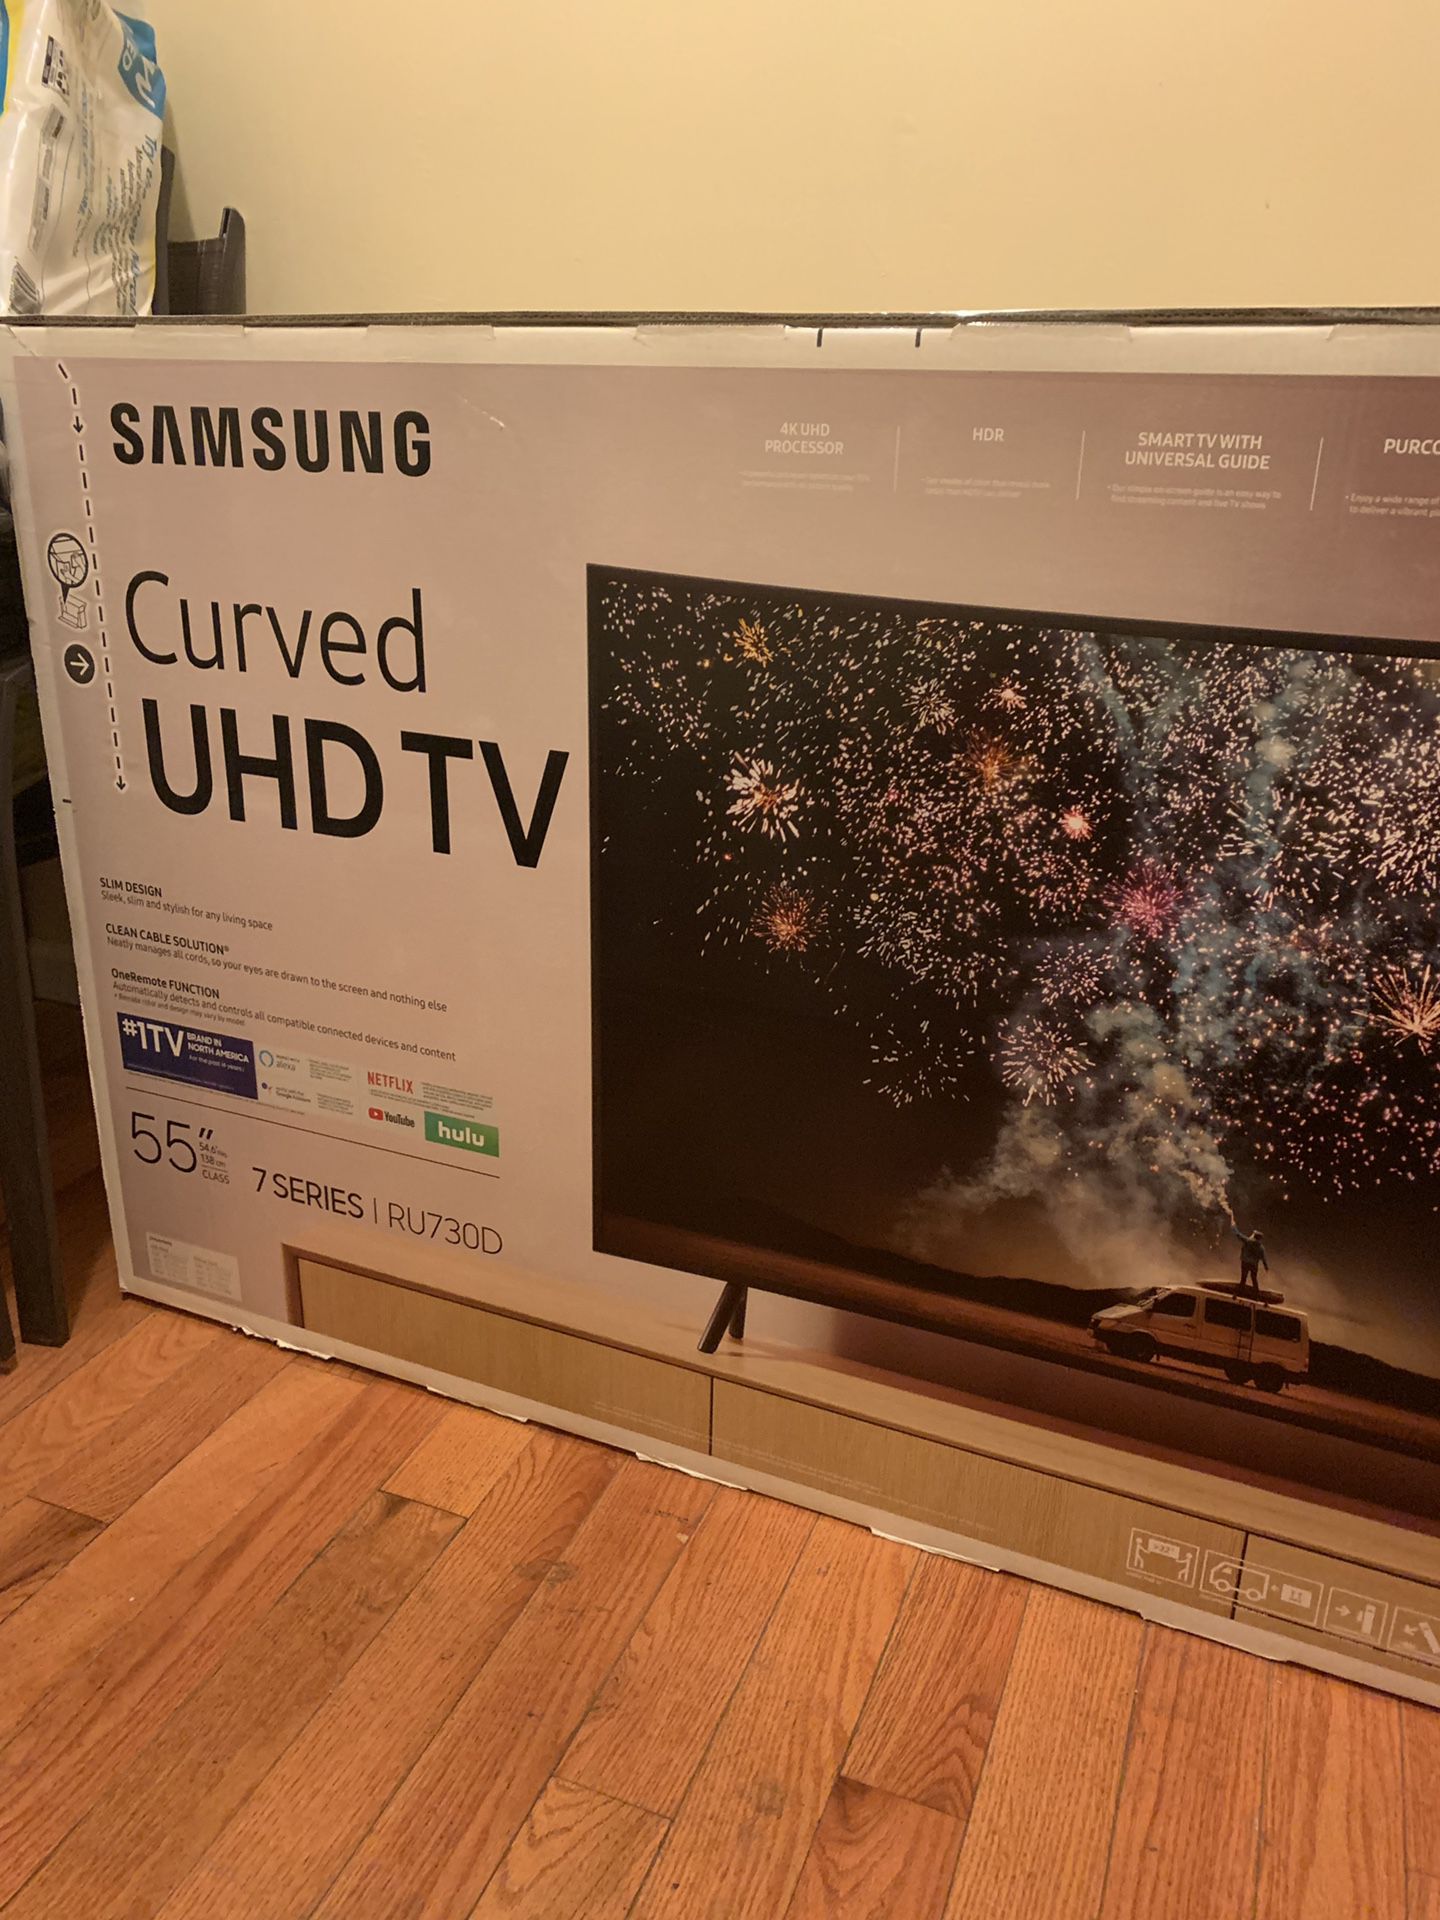 Samsung 55” curved tv 7series RU73OD